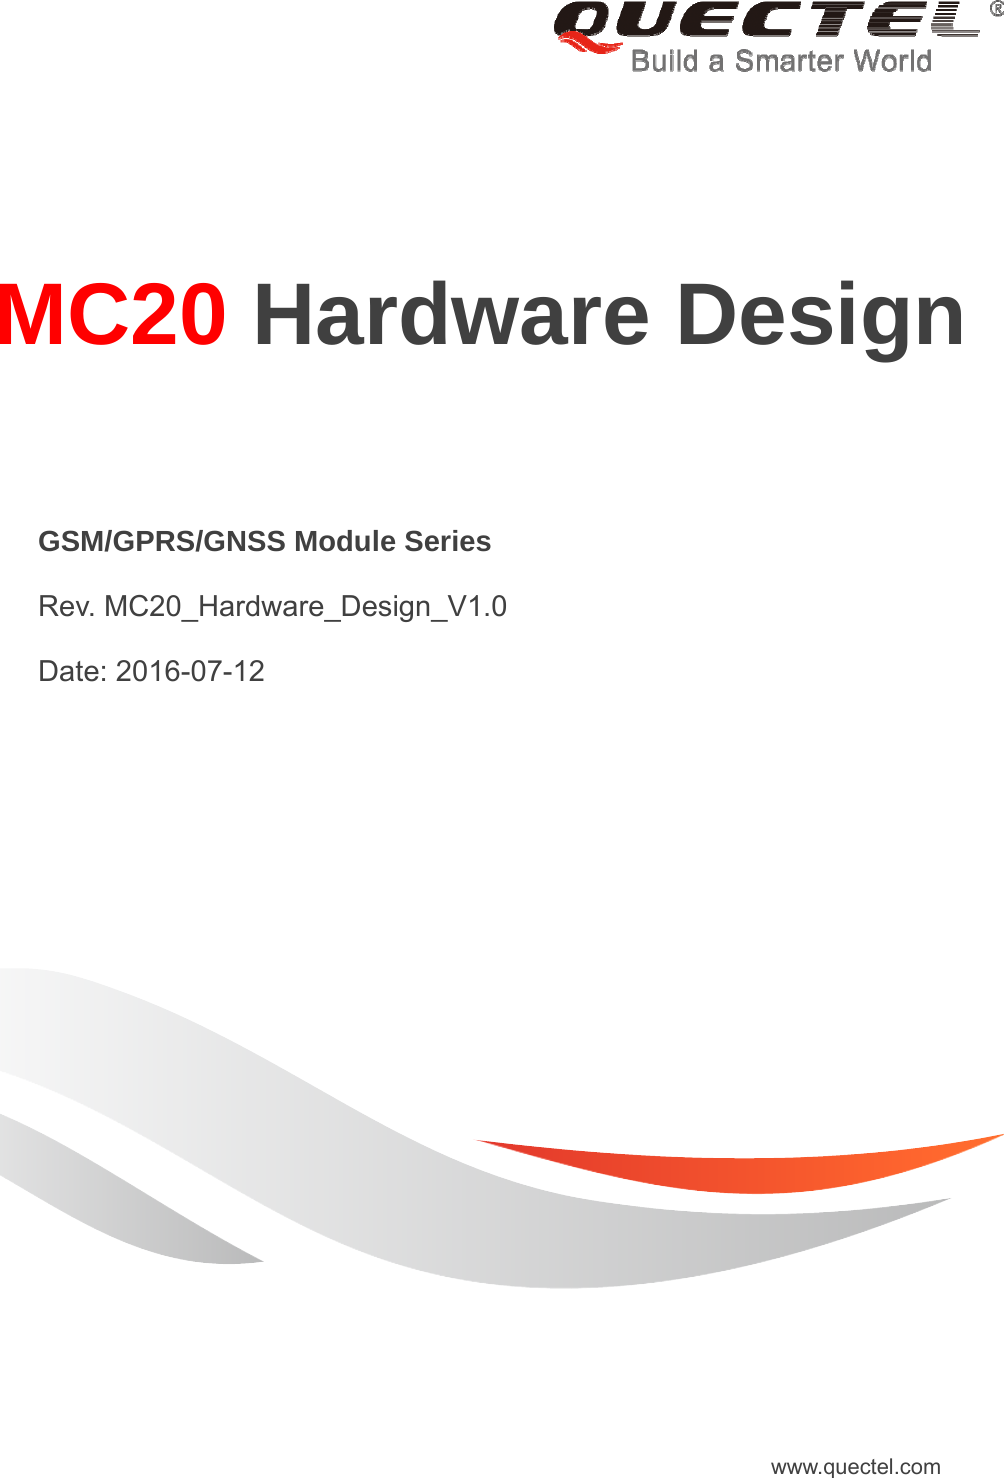     MC20 Hardware Design   GSM/GPRS/GNSS Module Series  Rev. MC20_Hardware_Design_V1.0  Date: 2016-07-12 www.quectel.com 